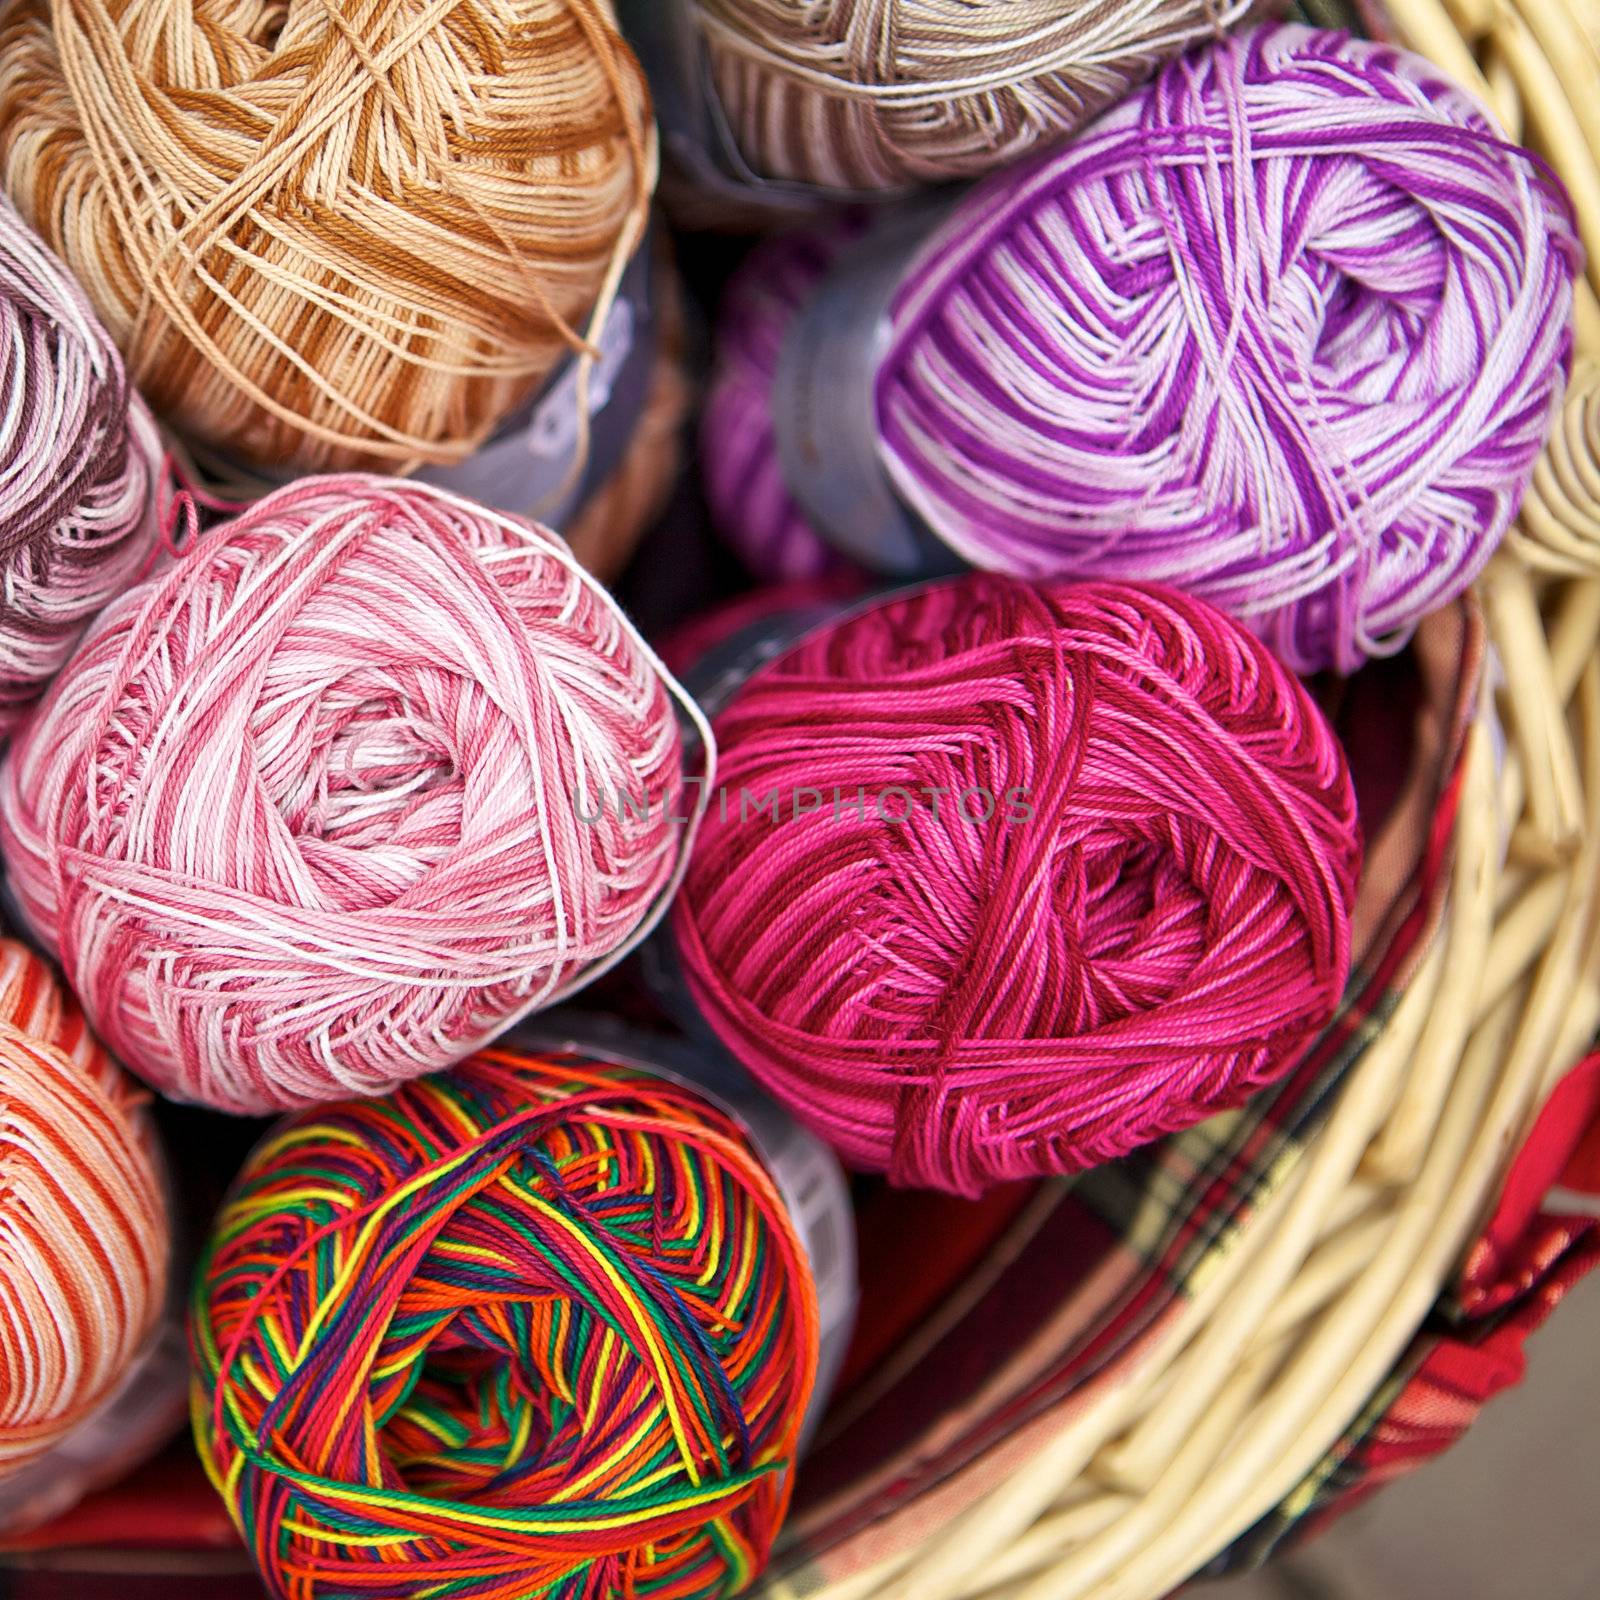 Knitted Wool by petr_malyshev